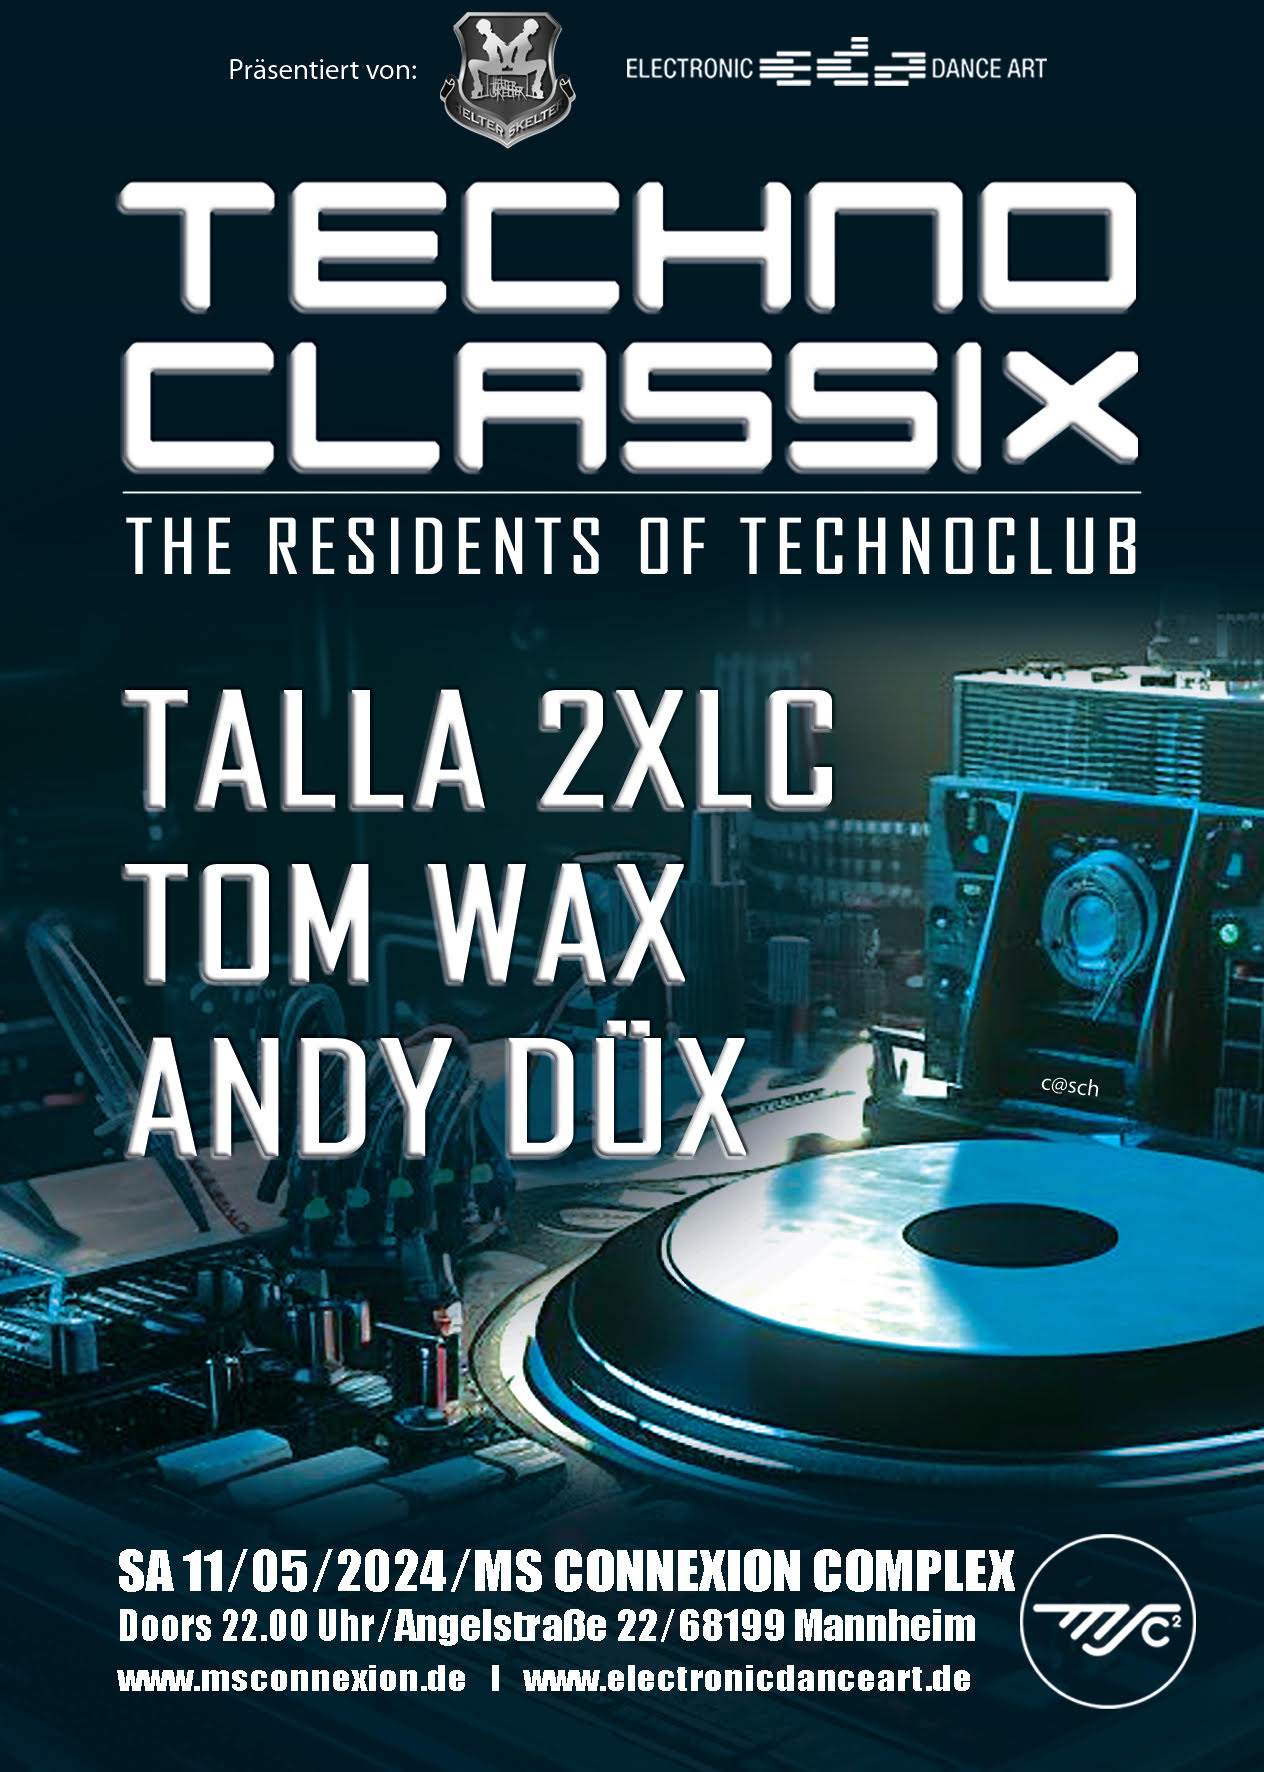 Techno Classix - The Residents of Technoclub - フライヤー表